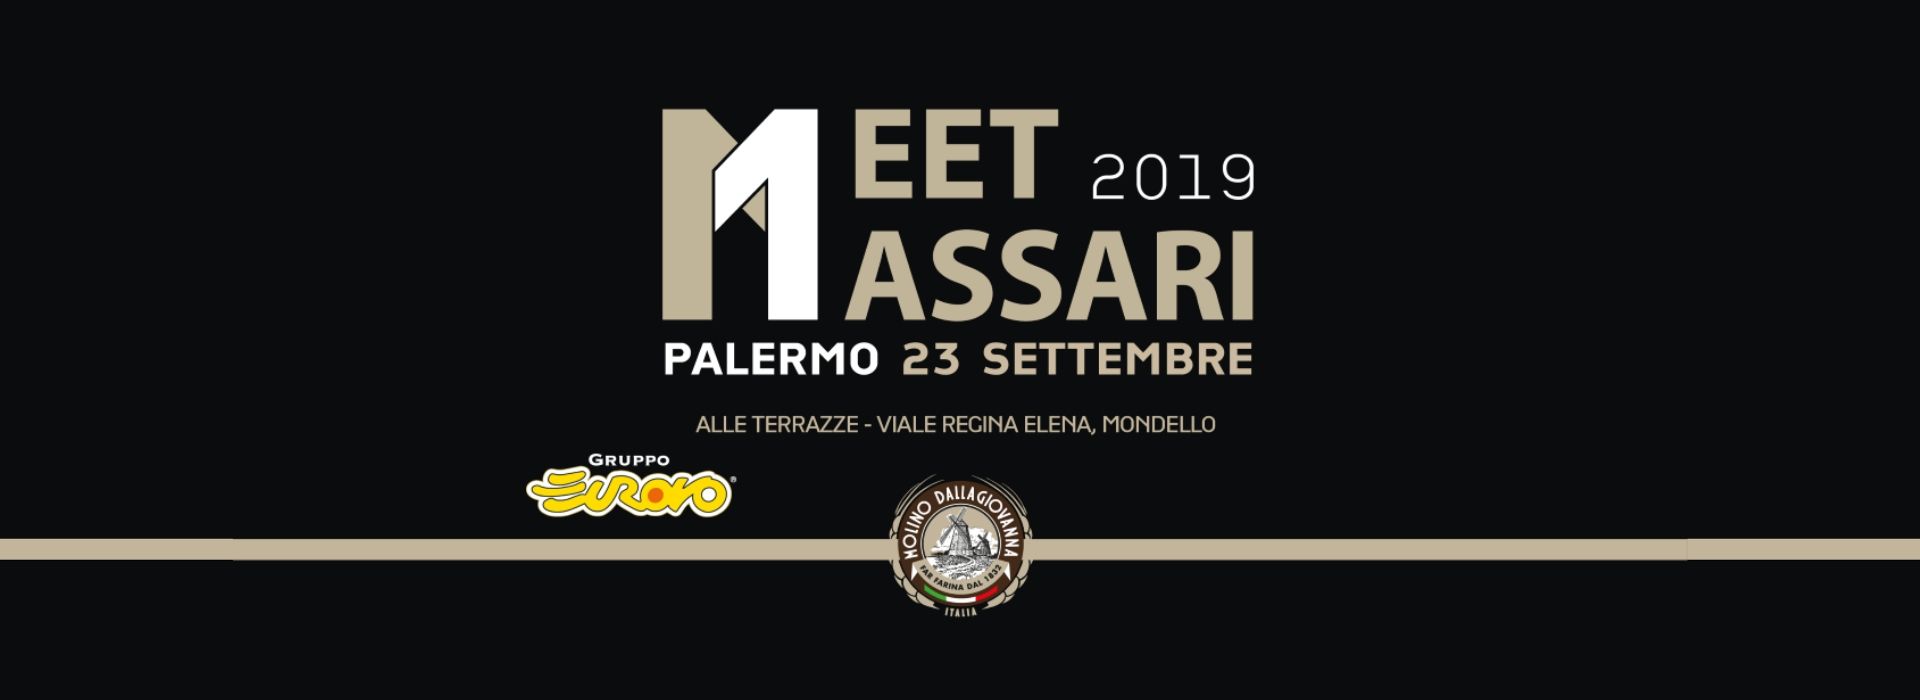 MEET MASSARI TOUR 2019 – TAPPA PALERMO